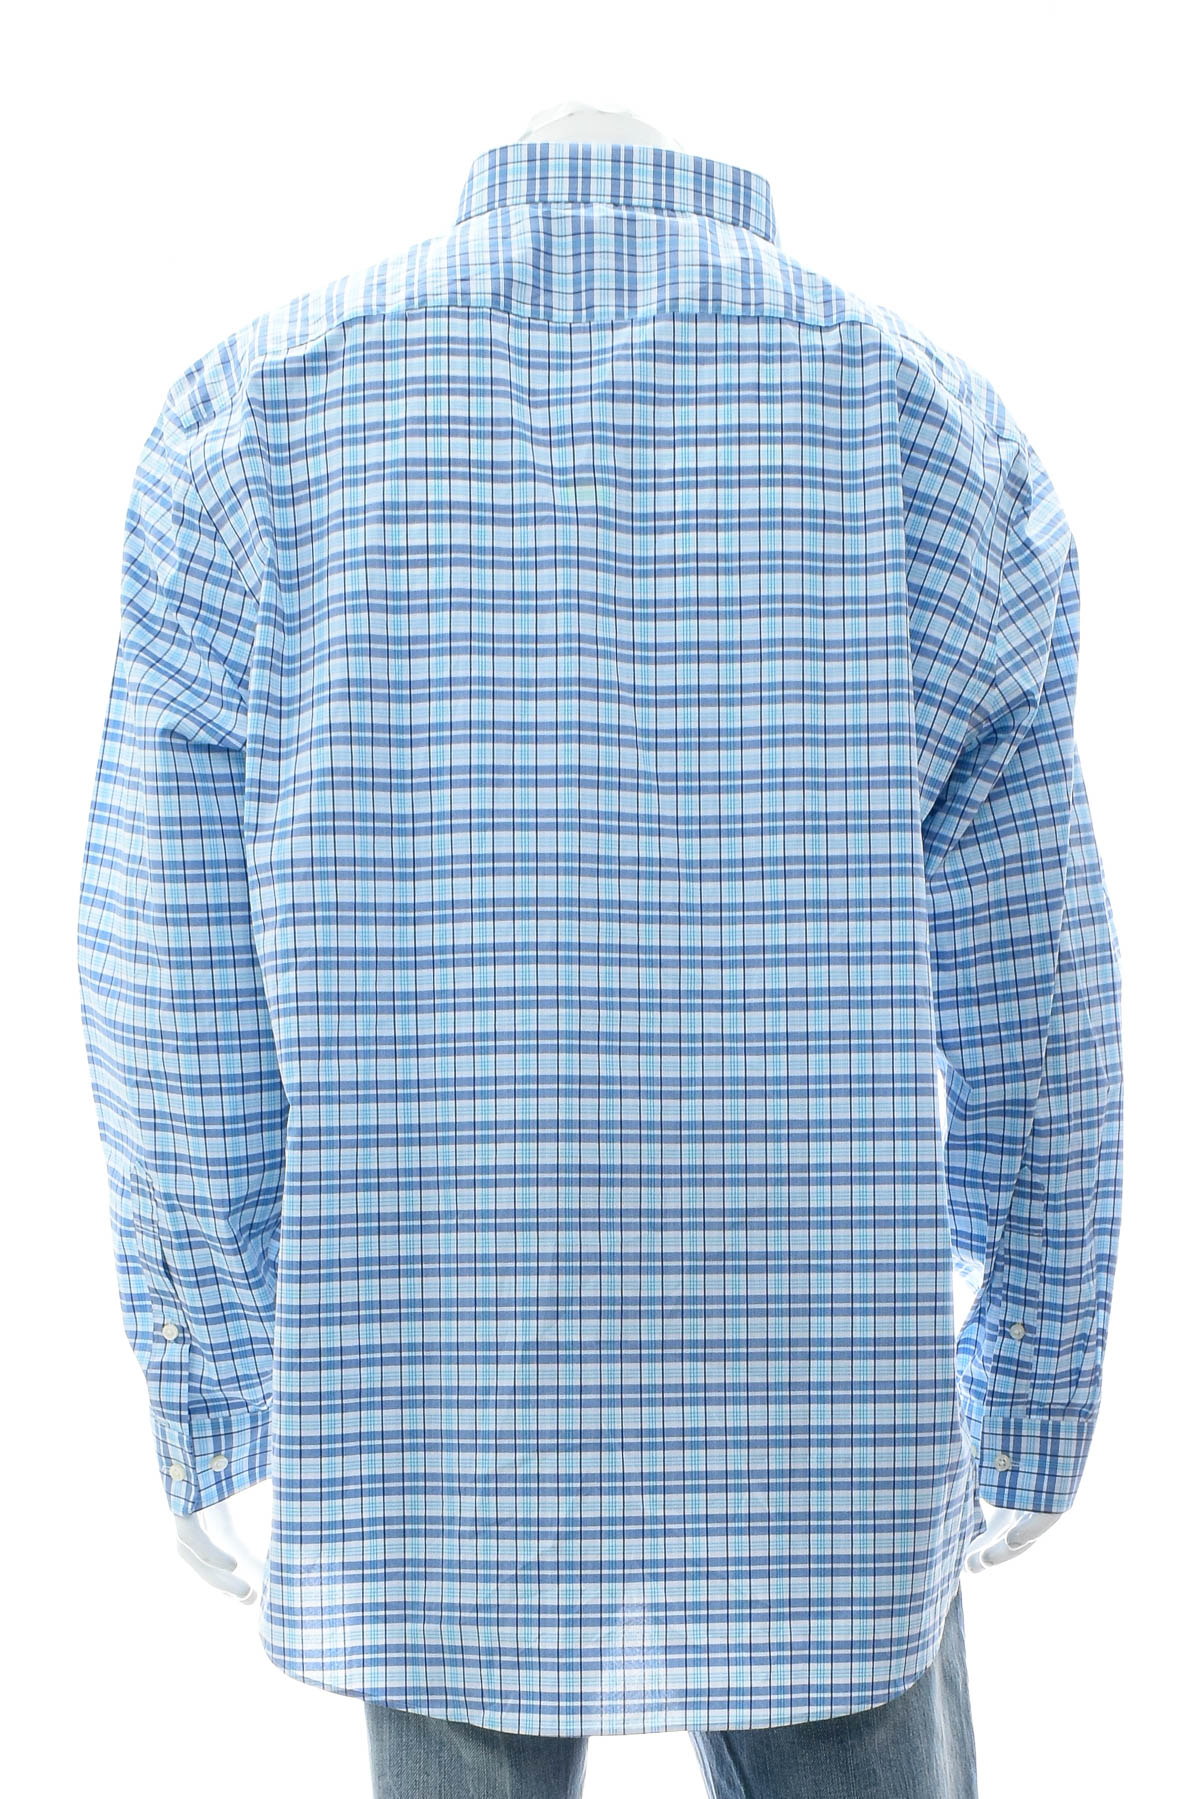 Men's shirt - Kirkland Signature - 1